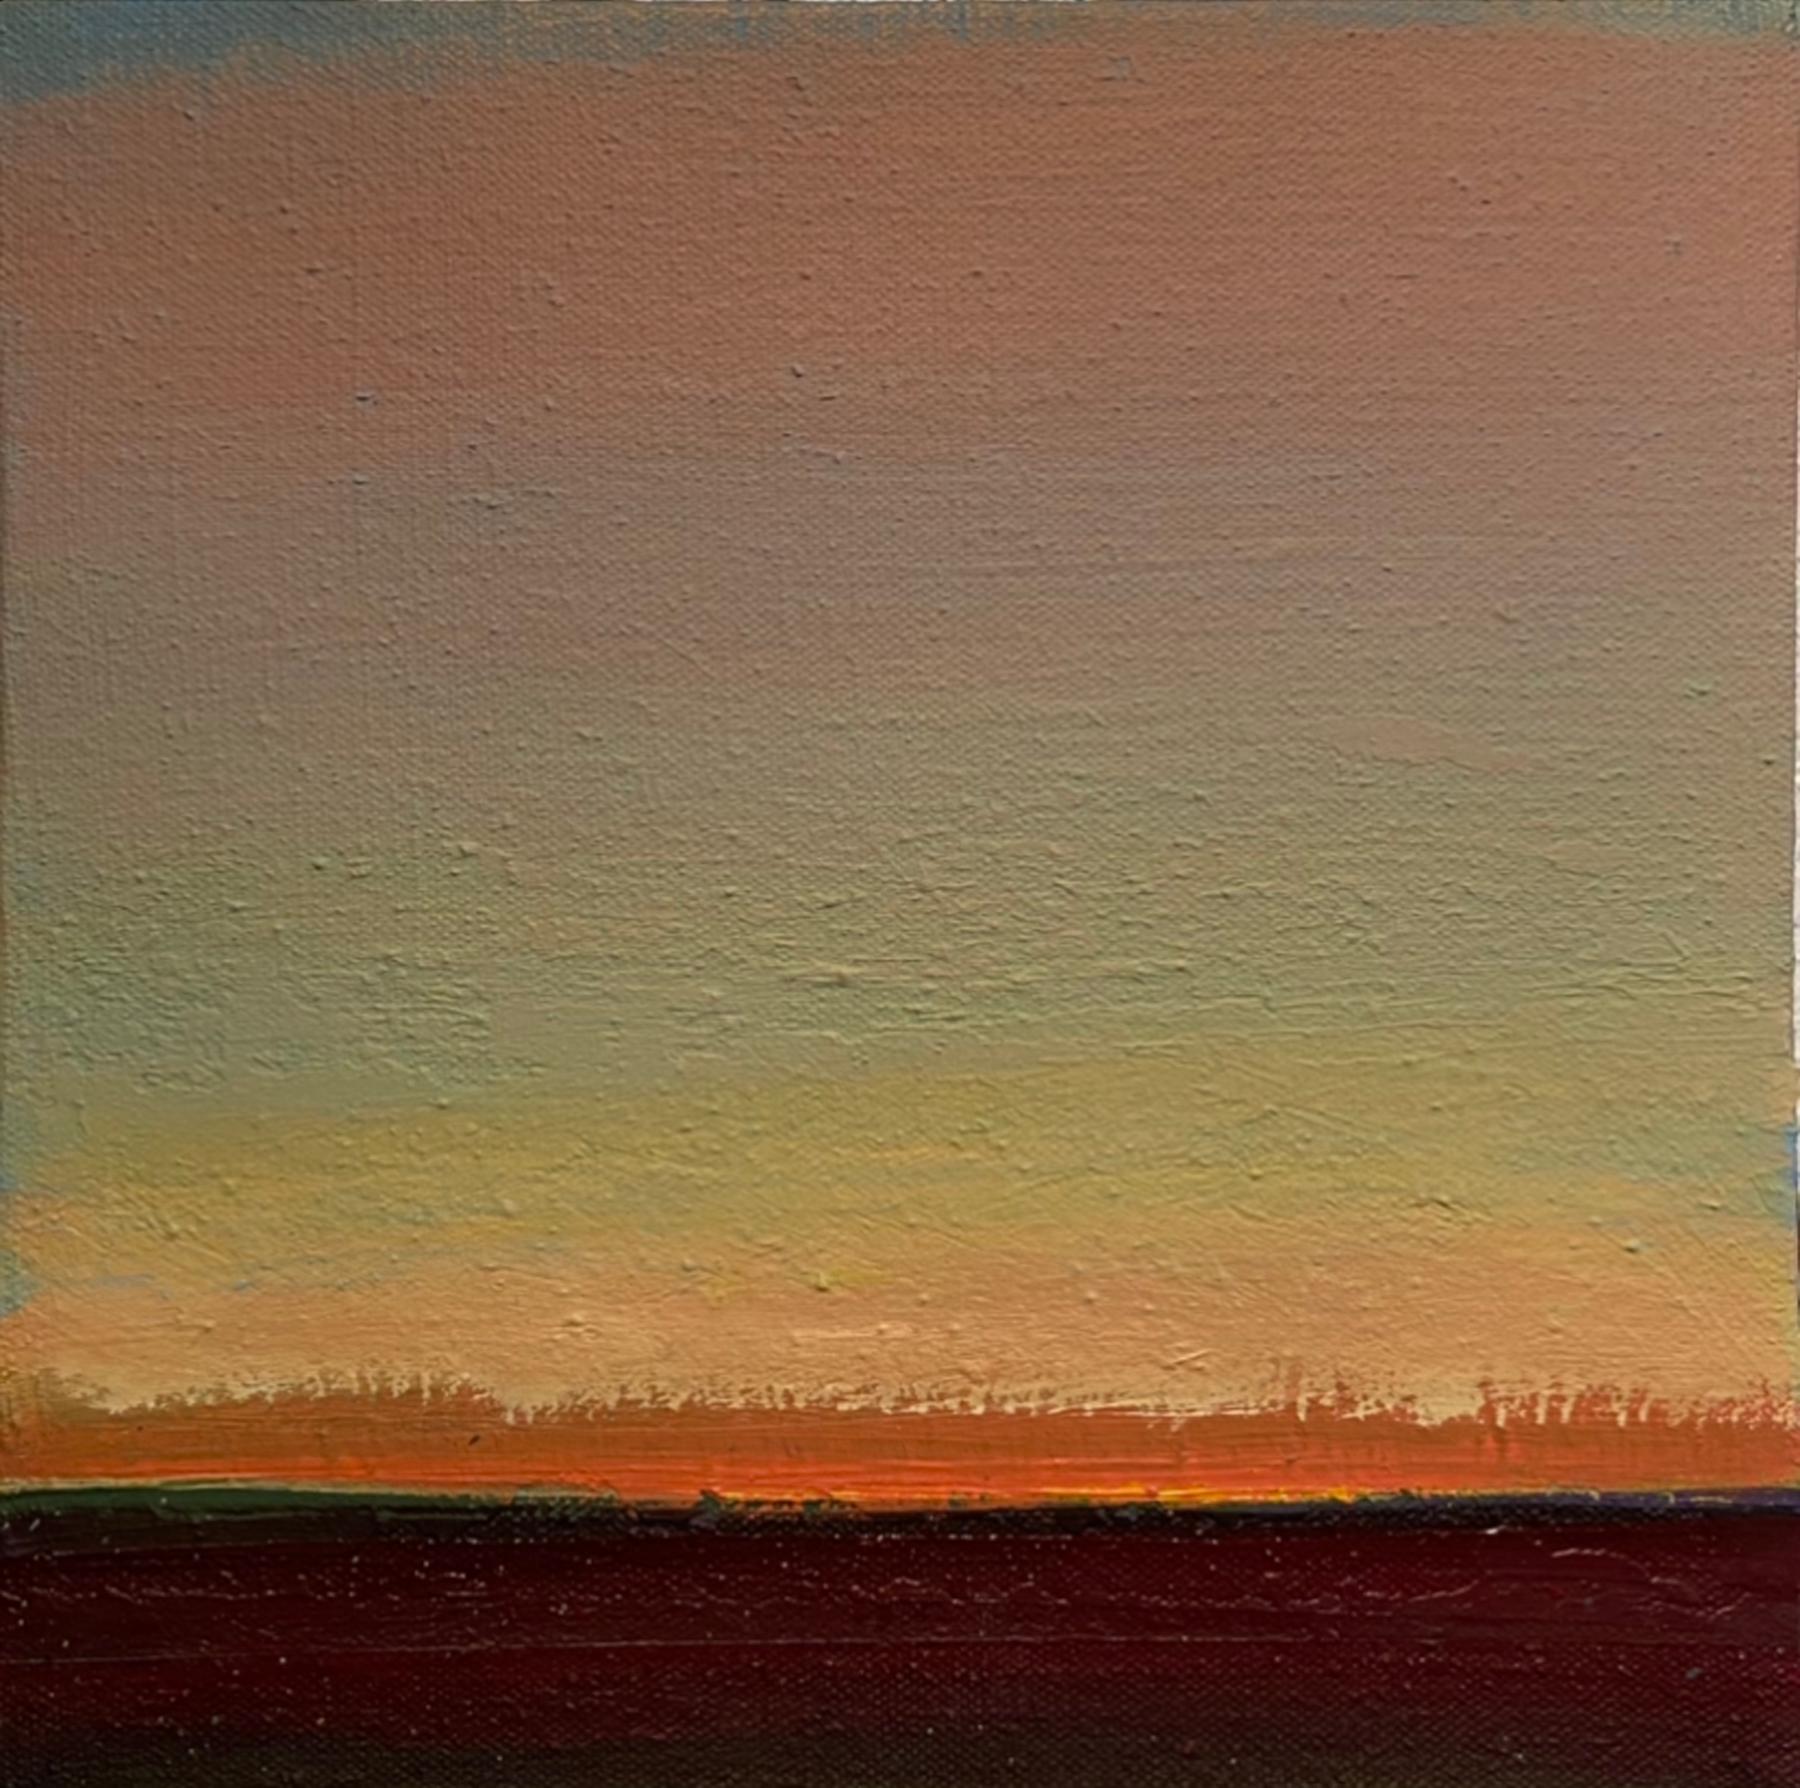 Alyson Kinkade Landscape Painting - Remembering Plains no. 56